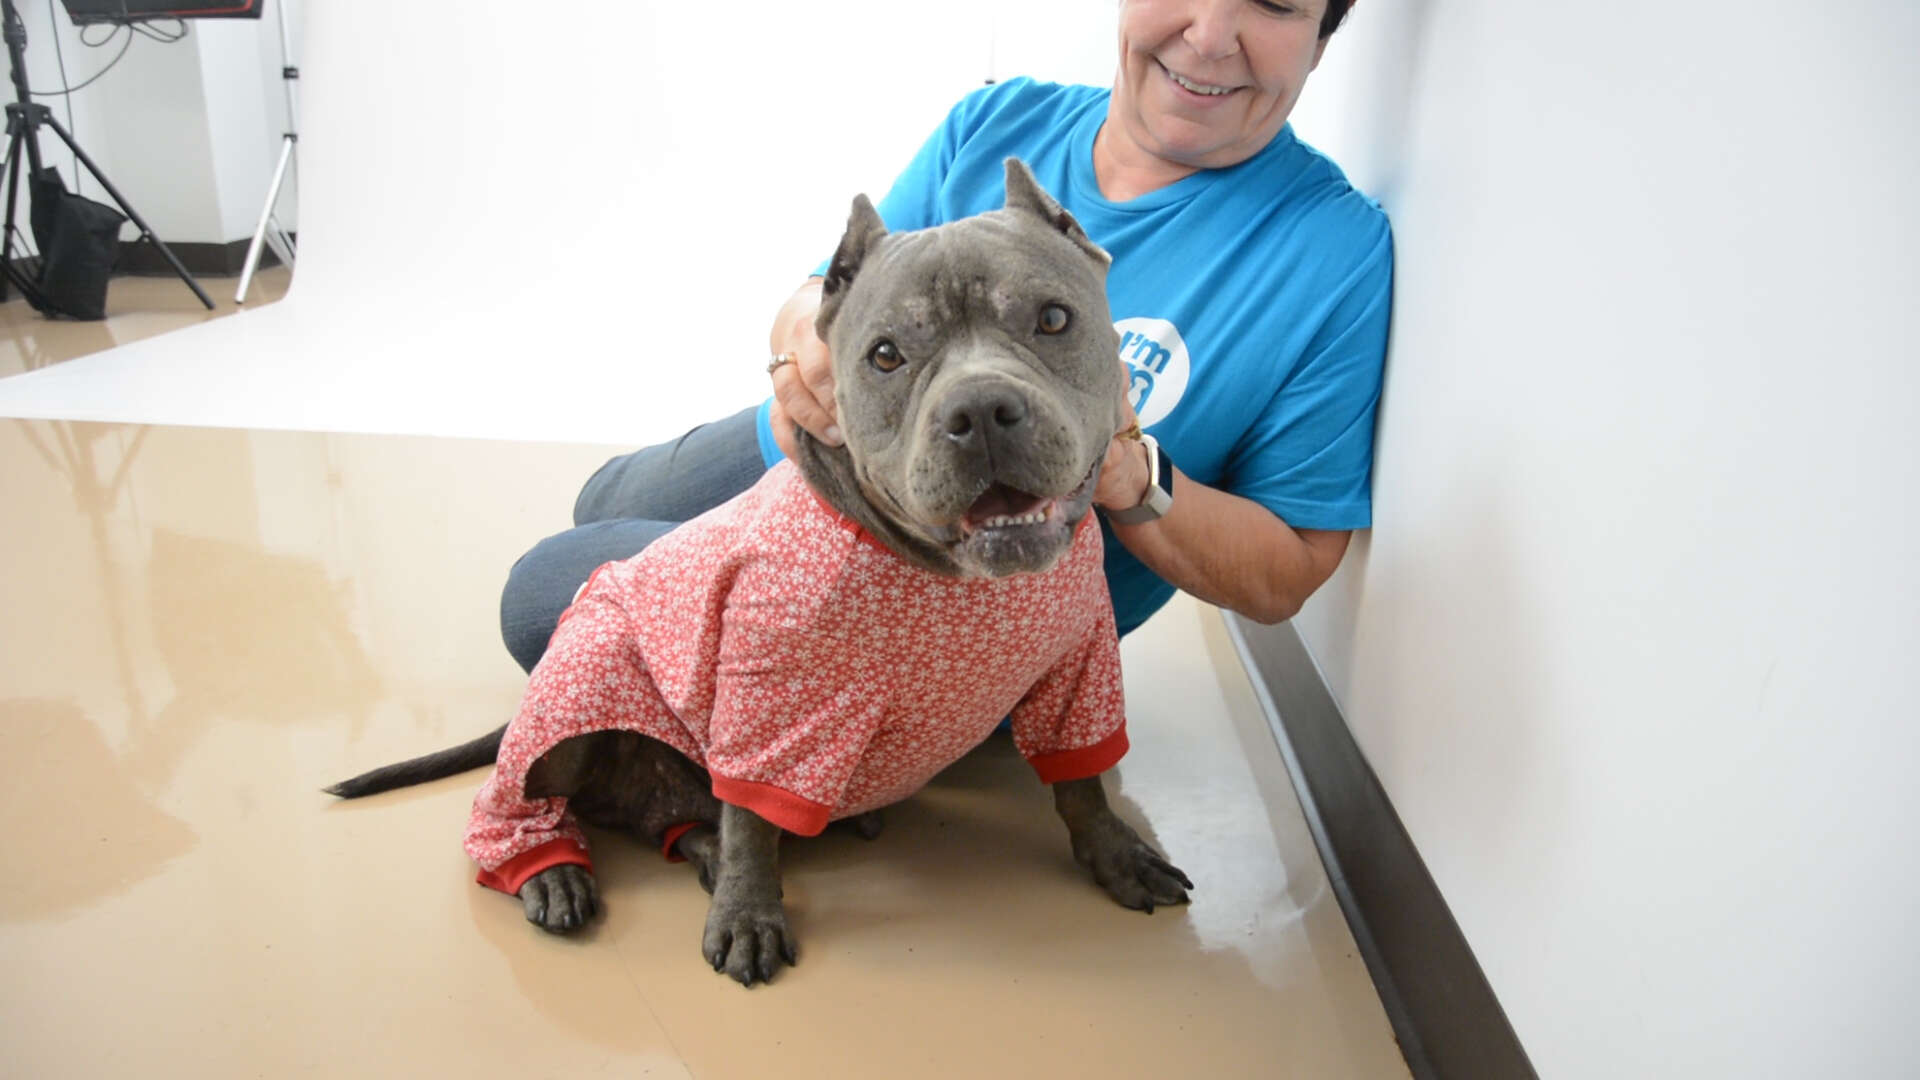 Shelter dog in pajamas